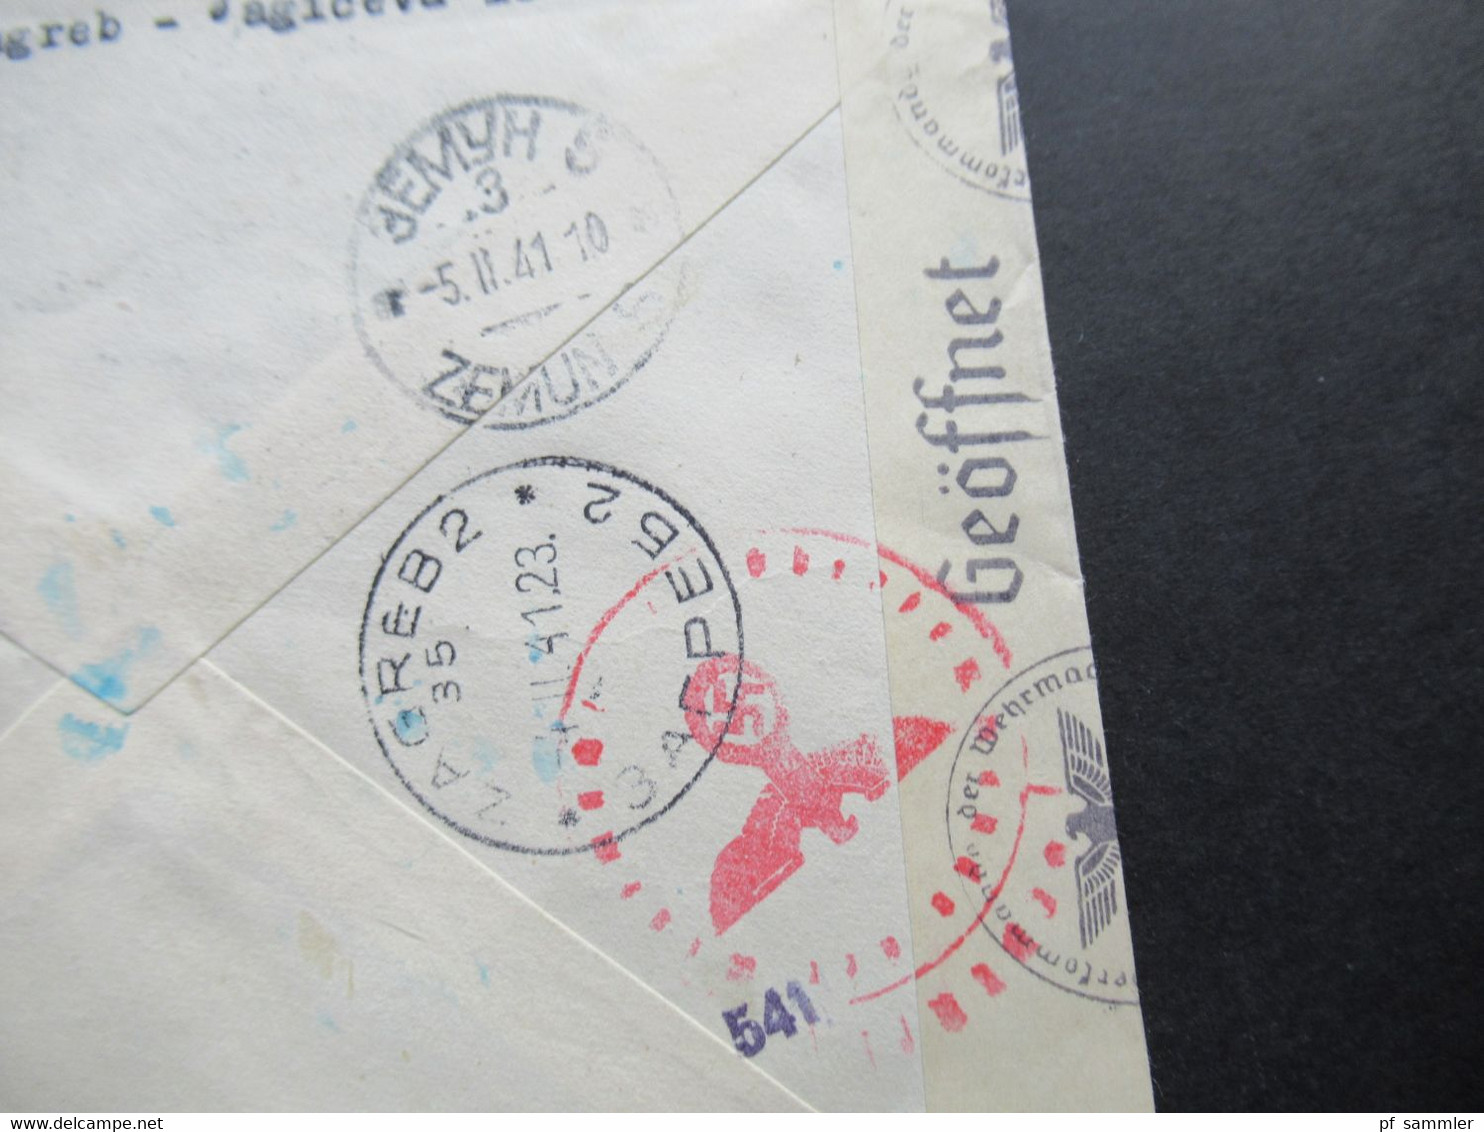 Jugoslawien 1941 Zensurbeleg / OKW Zensur / Mehrfachzensur Luftpost Zagreb An Westphalen & Co. In Hamburg - Lettres & Documents